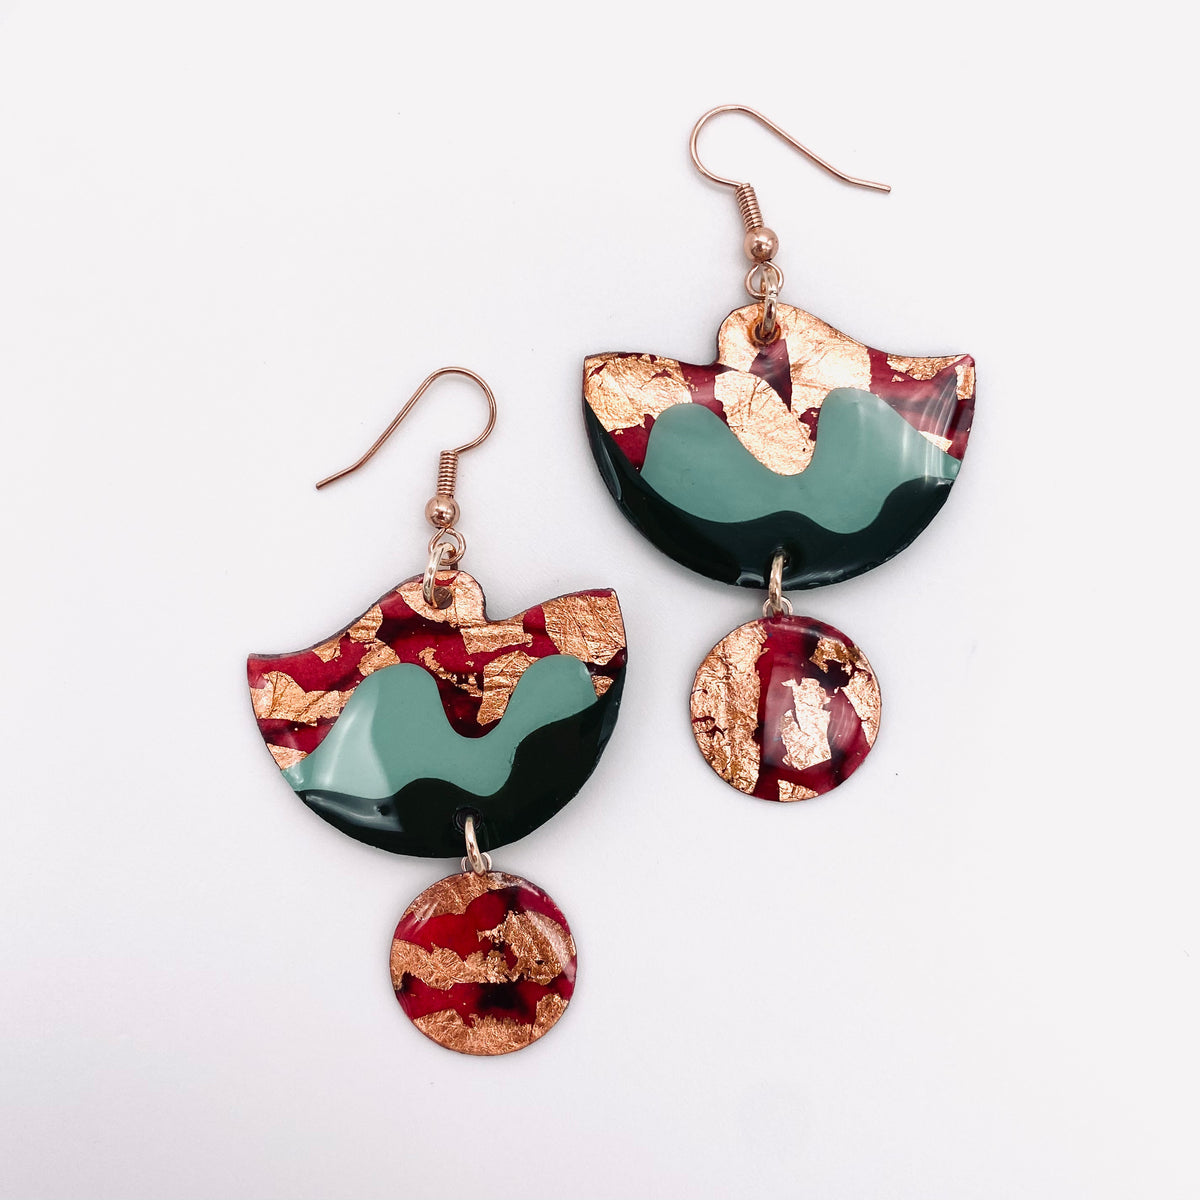 Tonn sgraffito textile earrings red/mint/olive/rose-gold